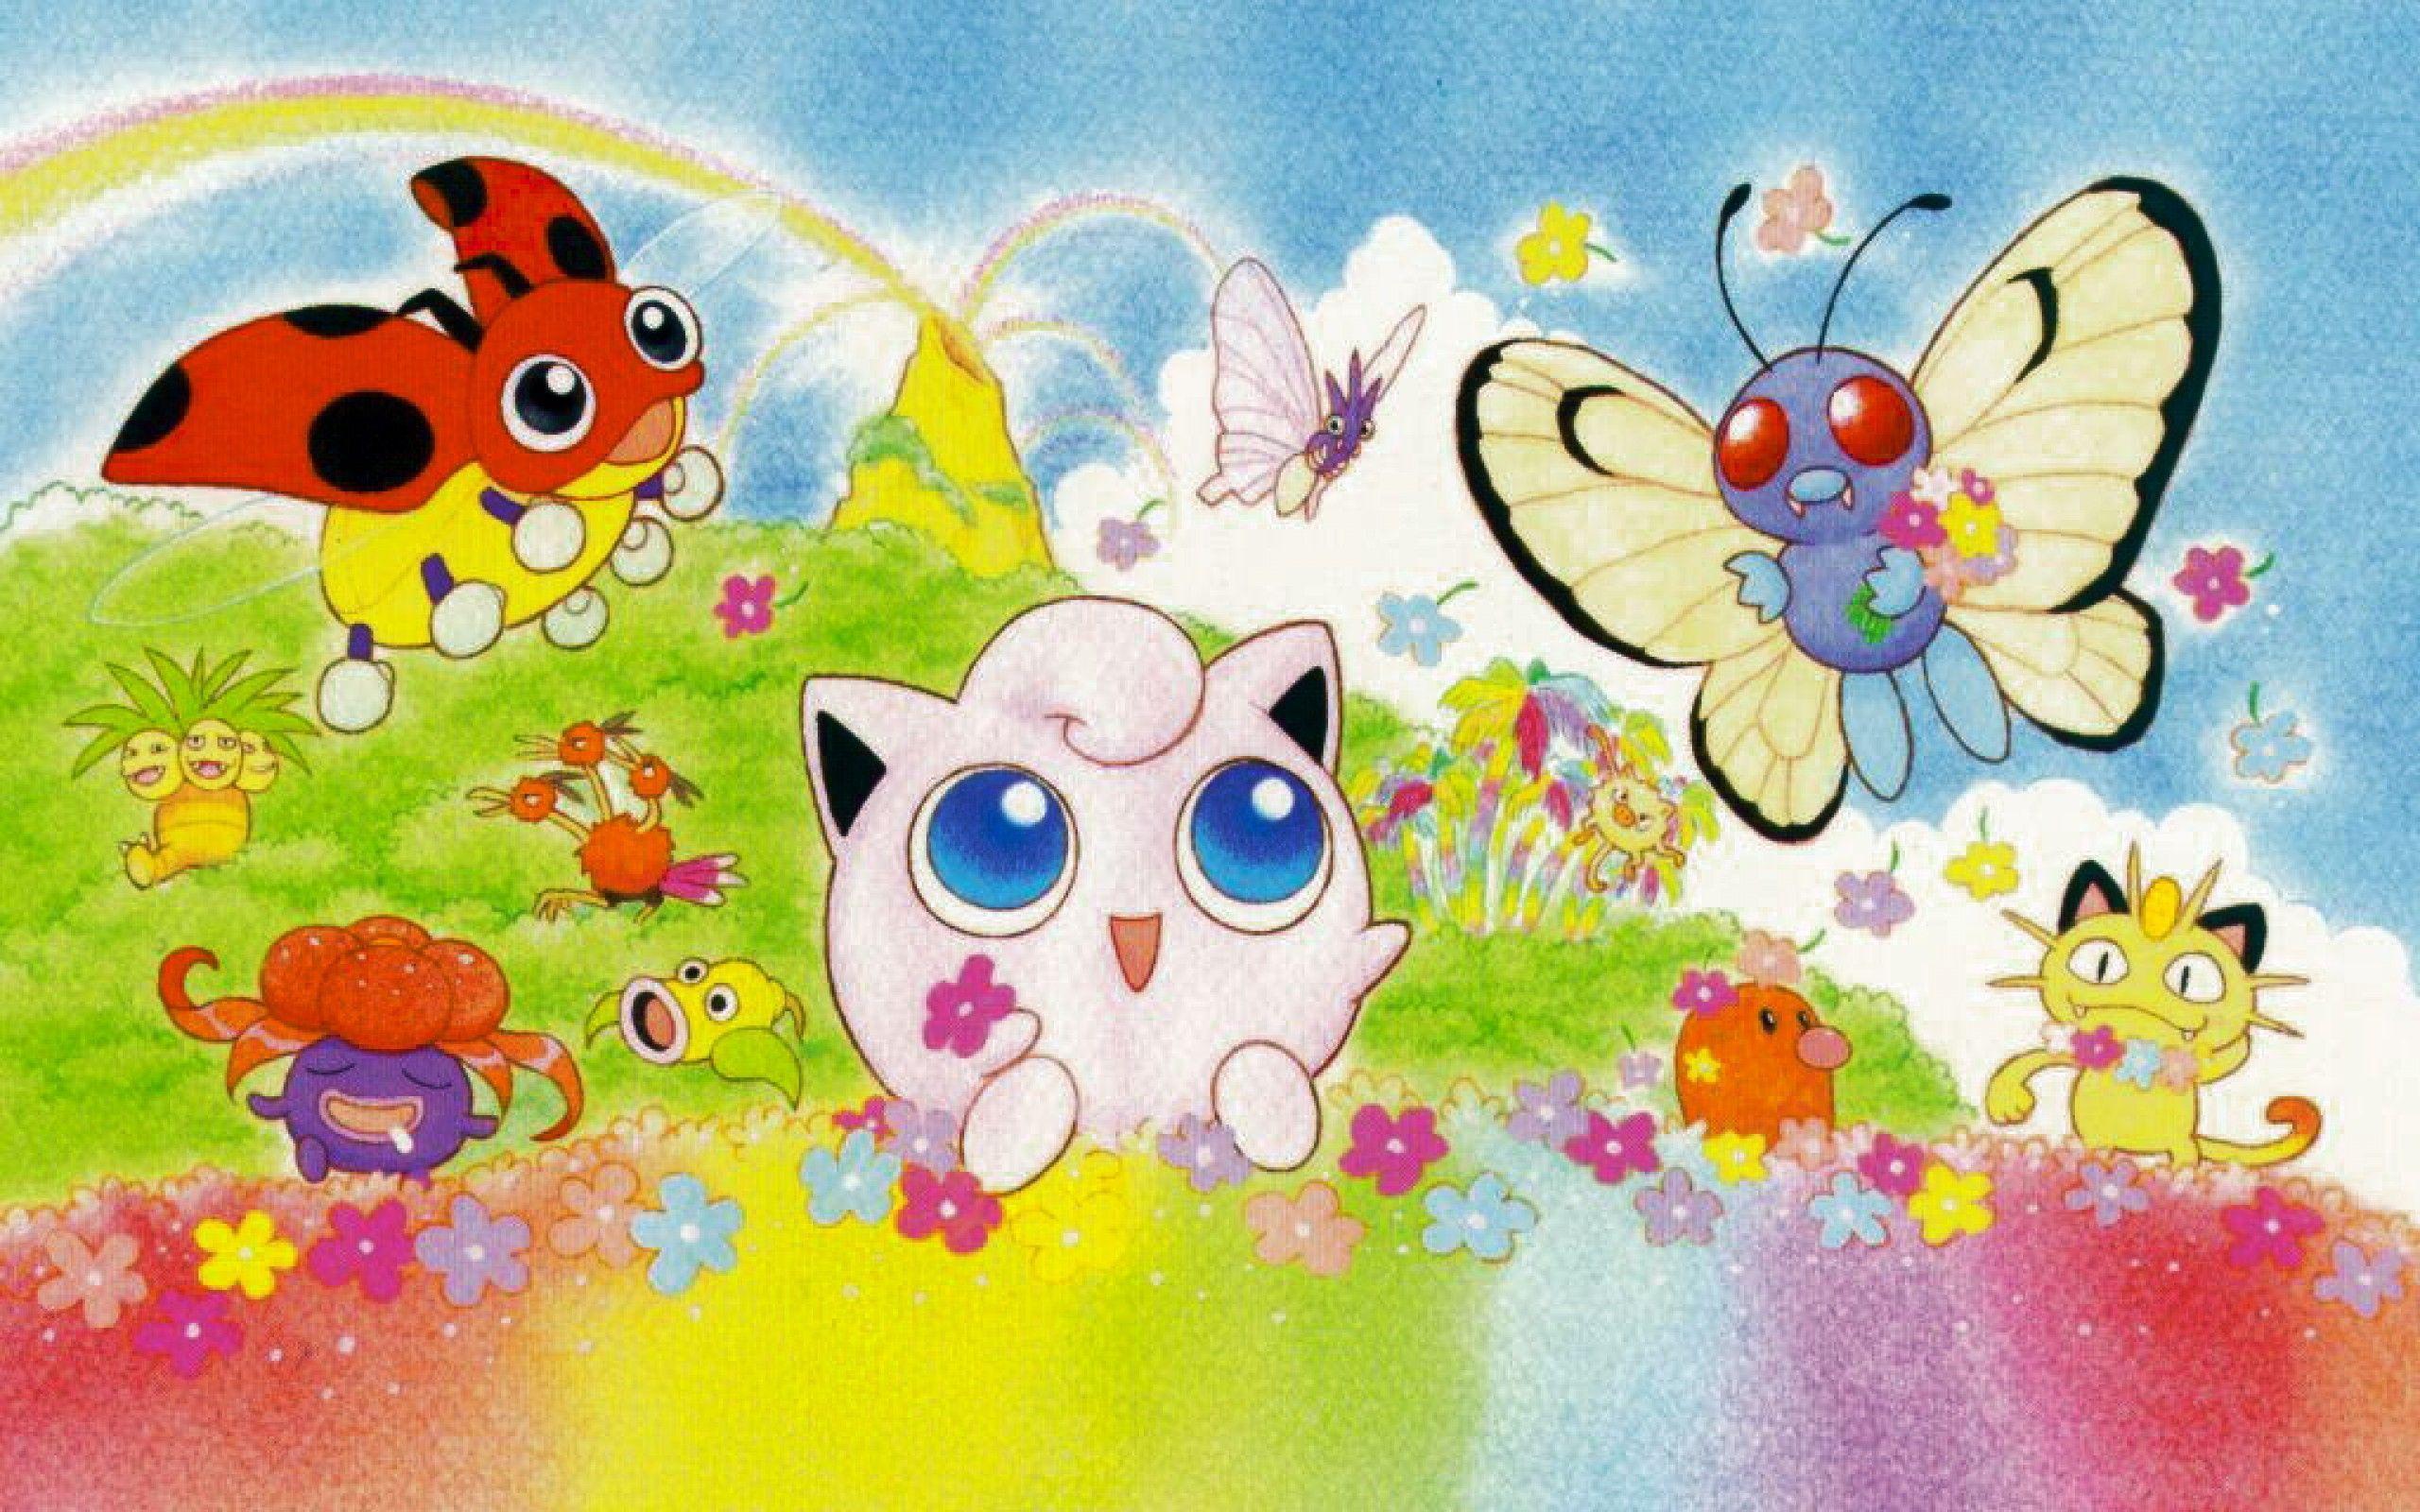 Cute Anime Pokemon Cartoons Picture Wallpaper